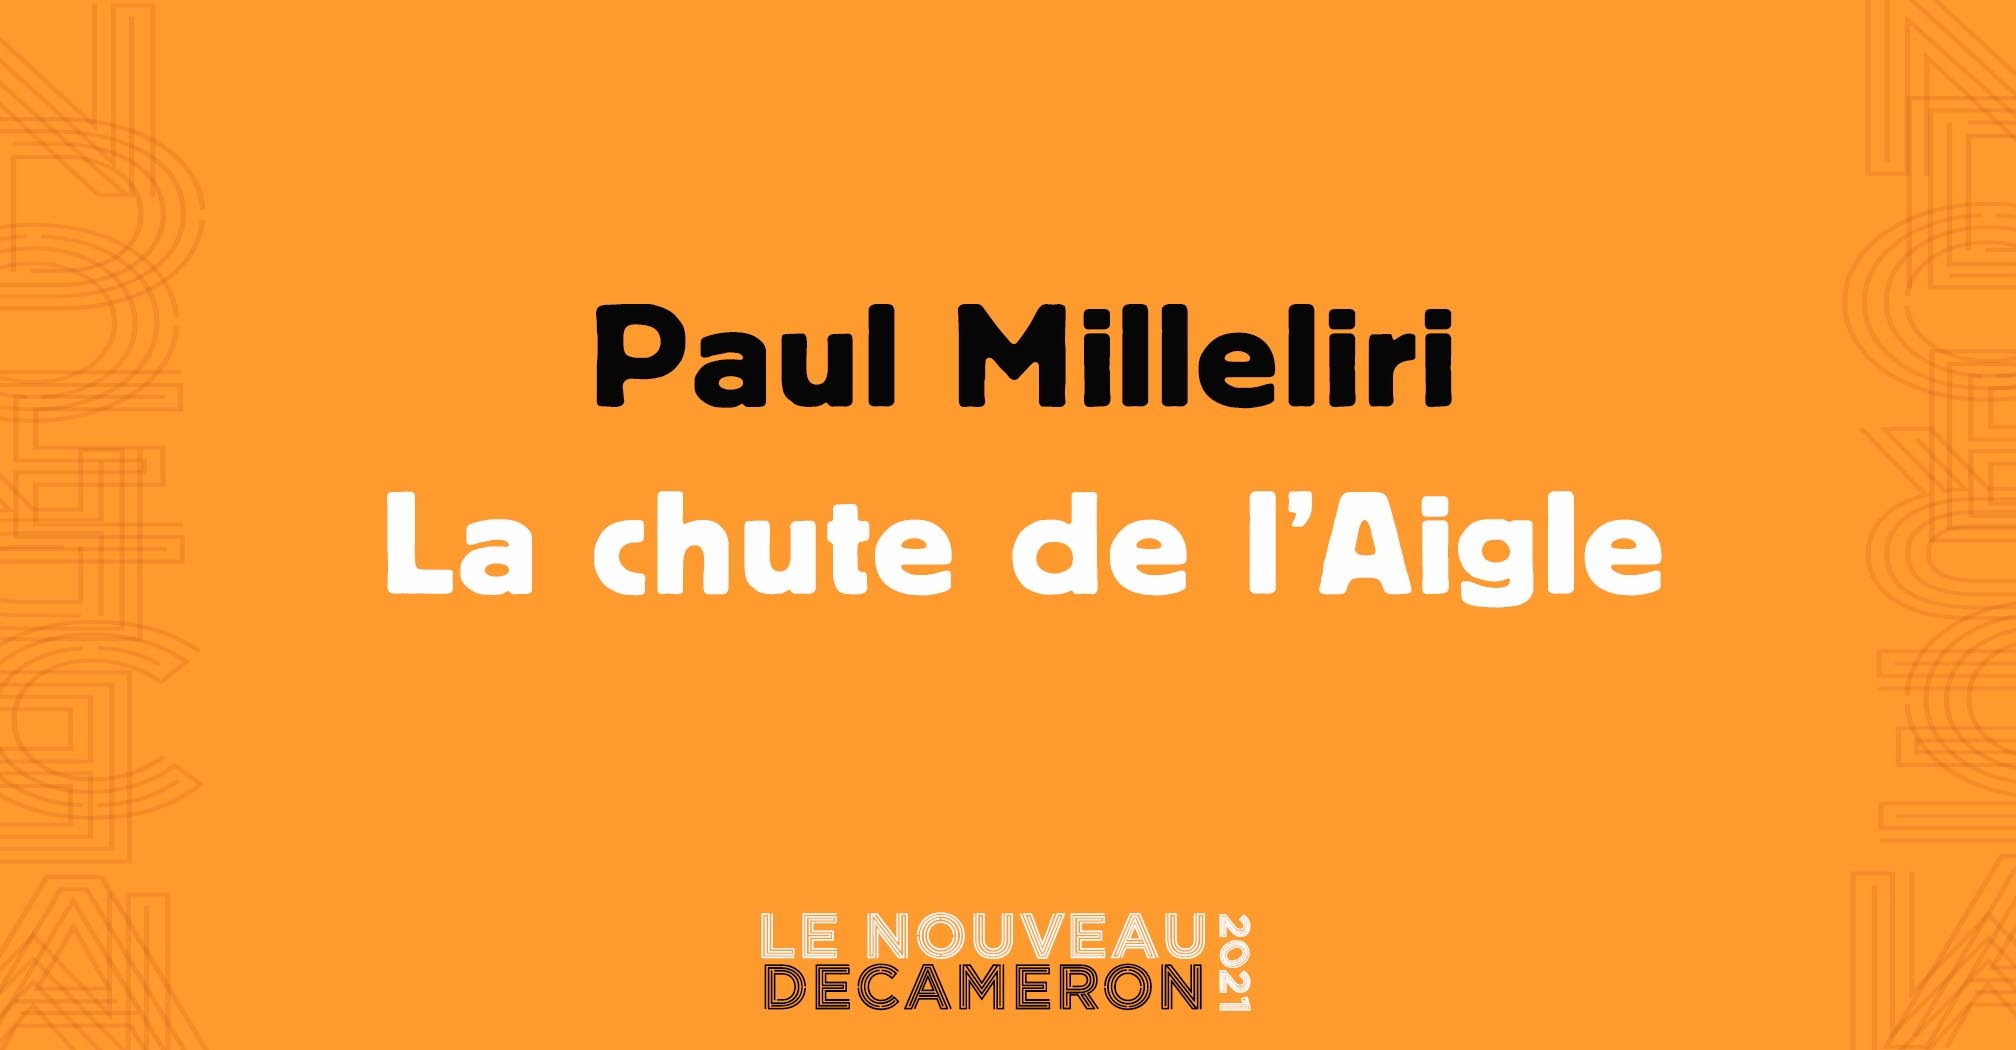  Paul Milleliri - La chute de l’Aigle